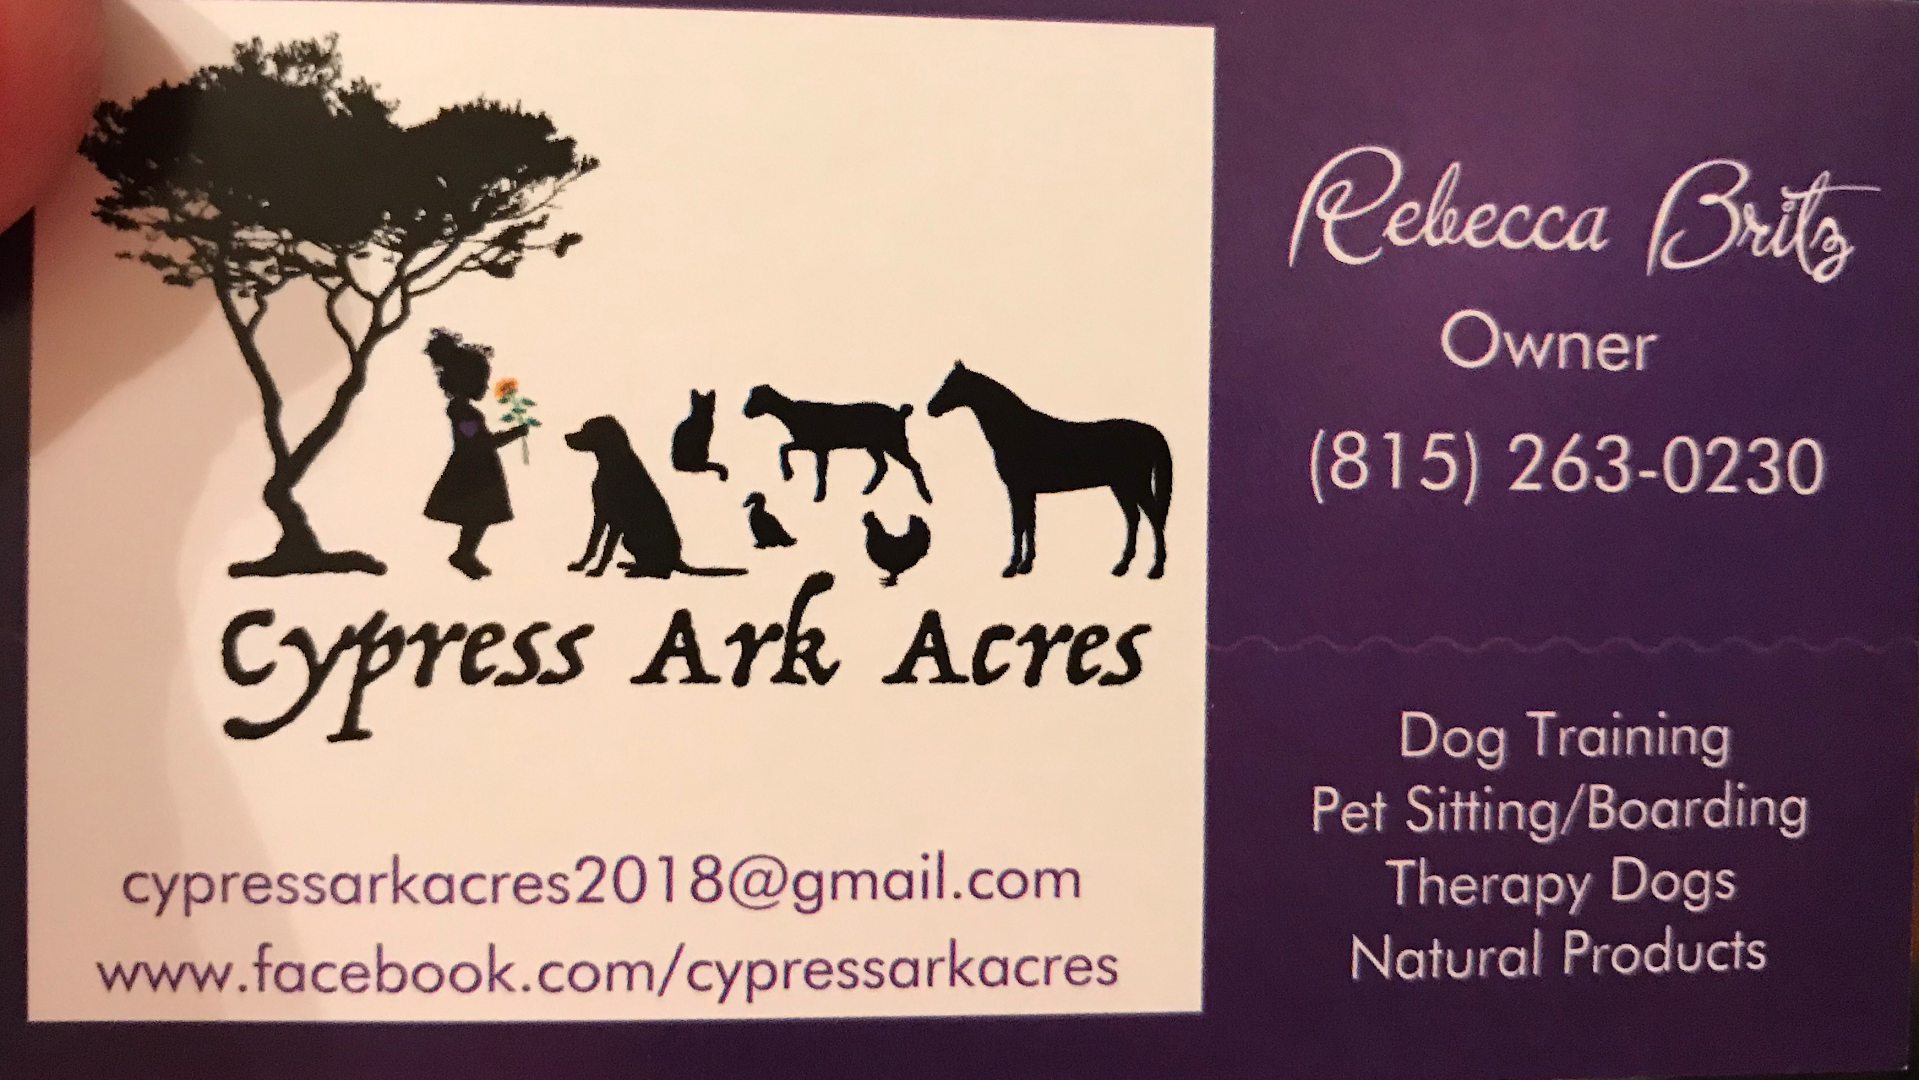 Cypress Ark Acres